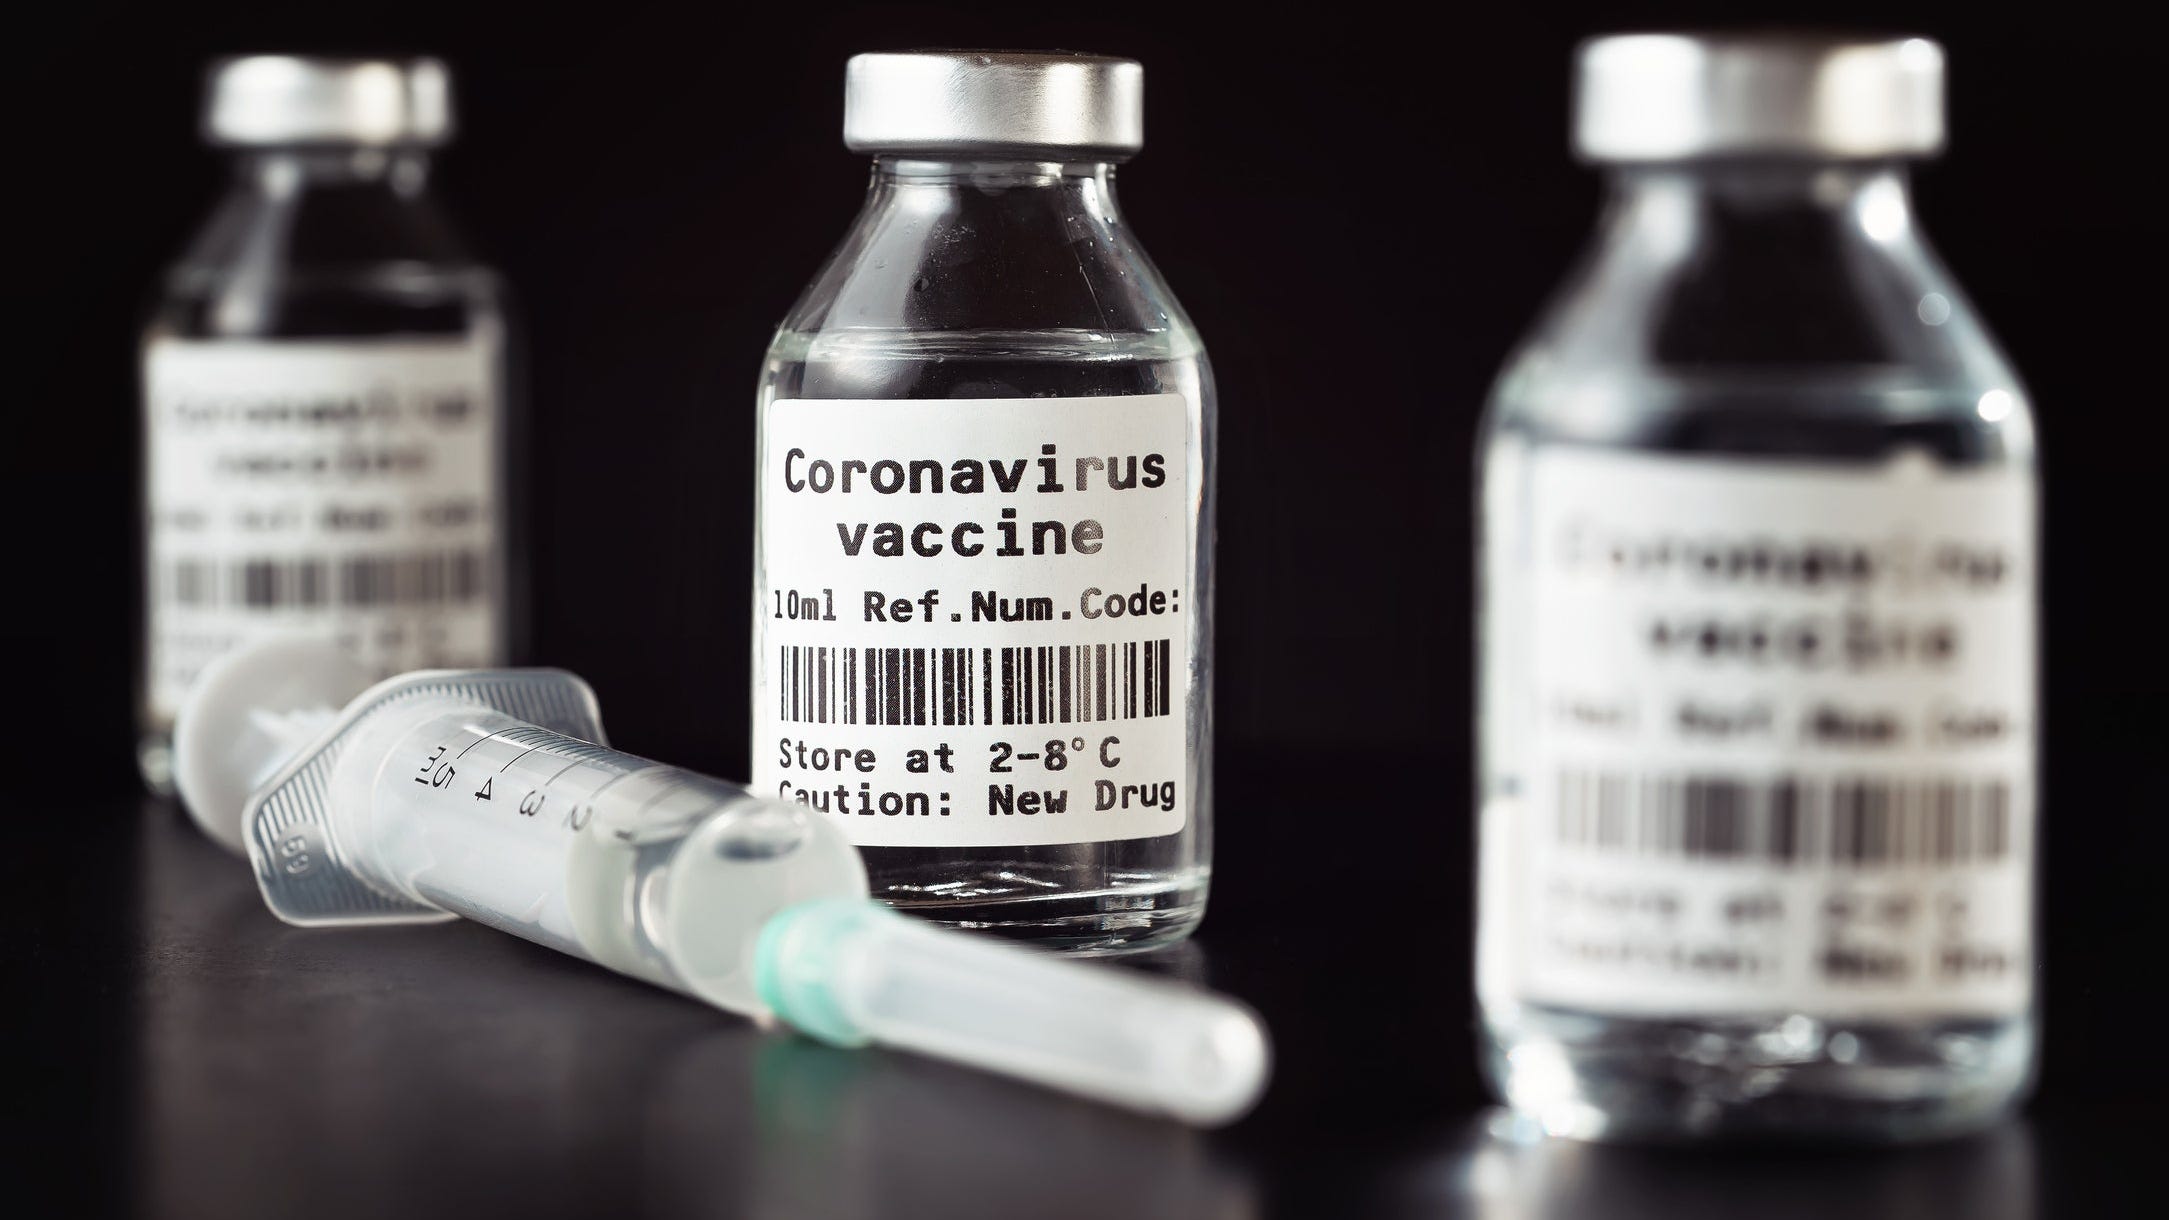 Three vaccine bottles that say Coronavirus vaccine next to a syringe.